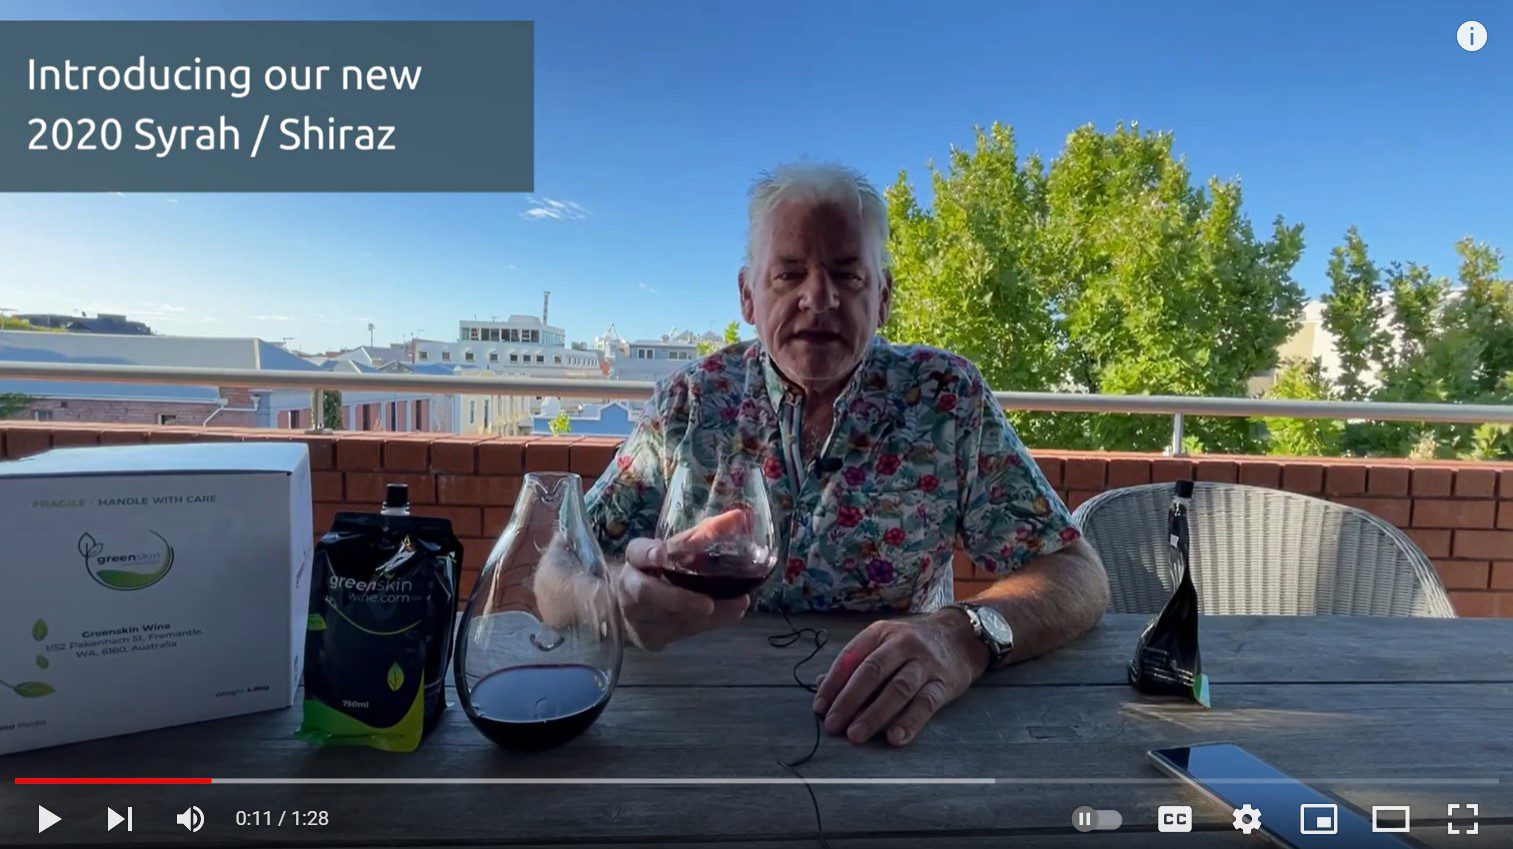 Mike Davies introduces Greenskin Wine 2020 Syrah